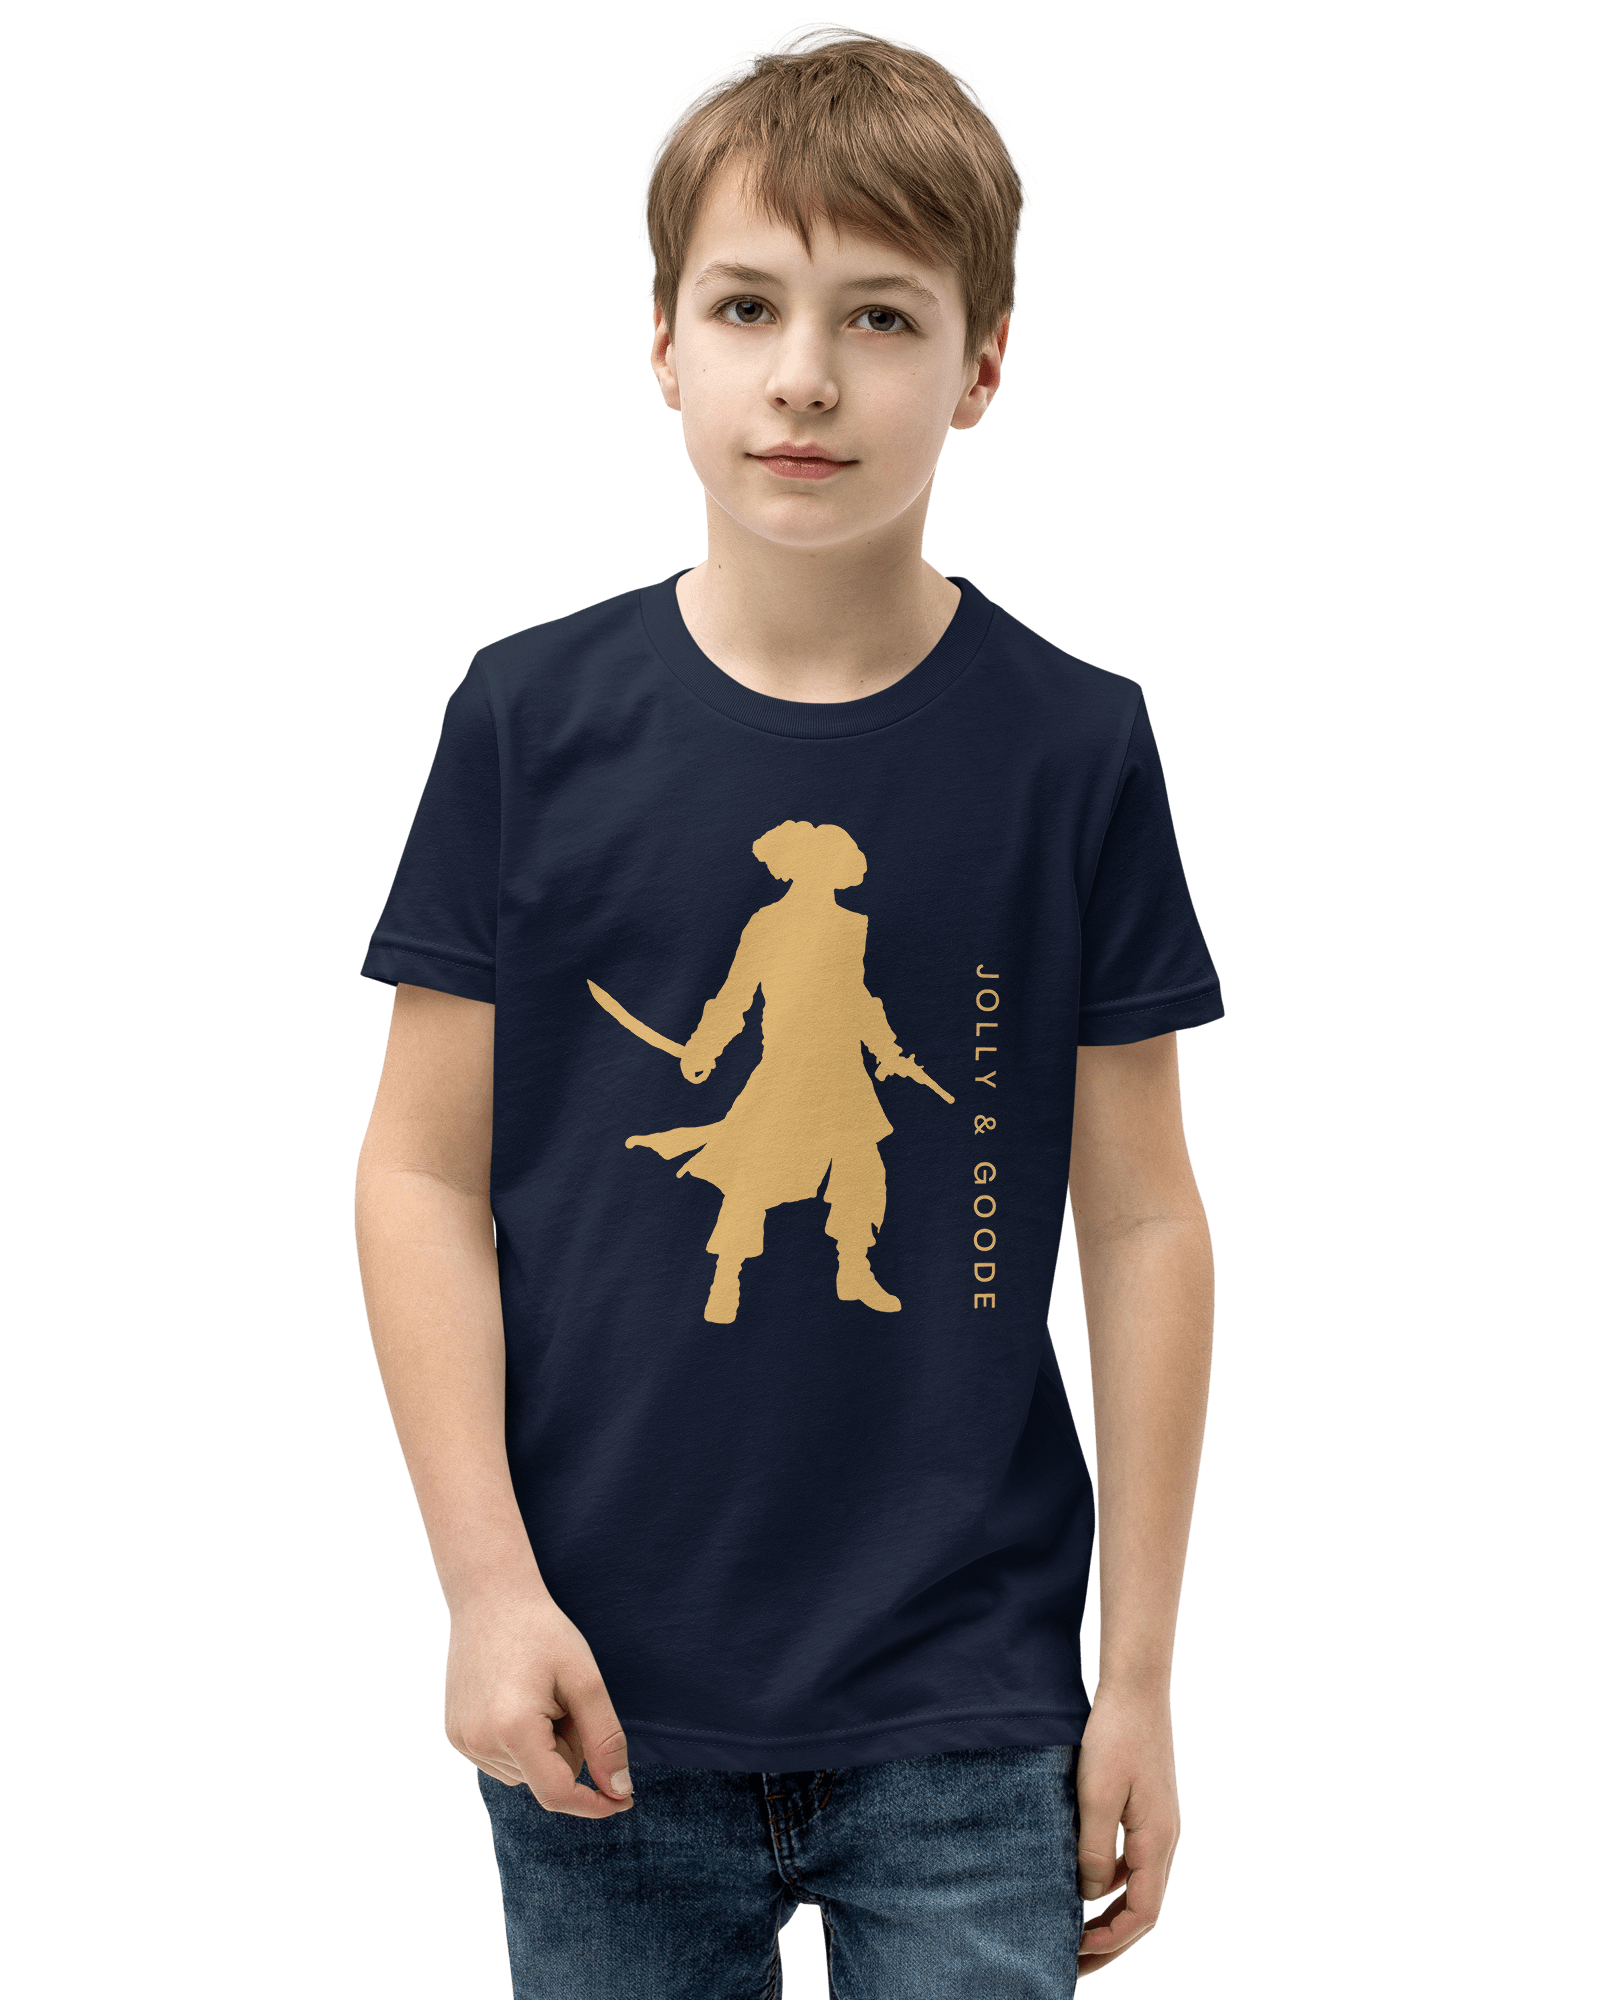 Jolly & Goode Pirate Silhouette Kids T-Shirt Navy / S kids t-shirts Jolly & Goode